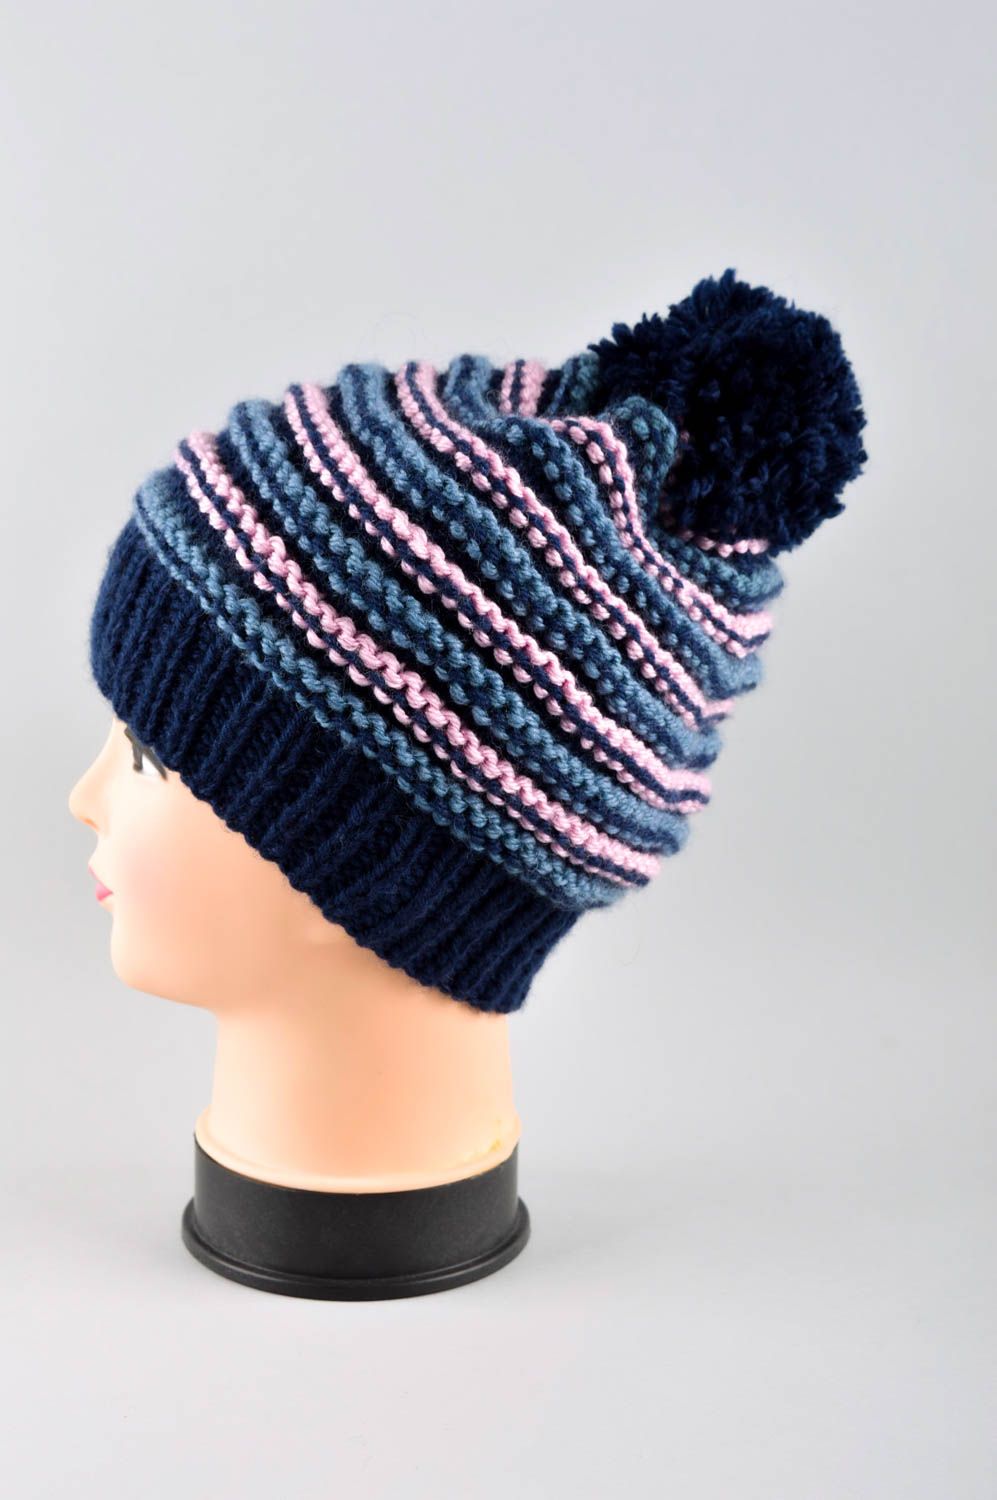 Hand-knitted hat women hat handmade winter accessories stylish hat for girls photo 3